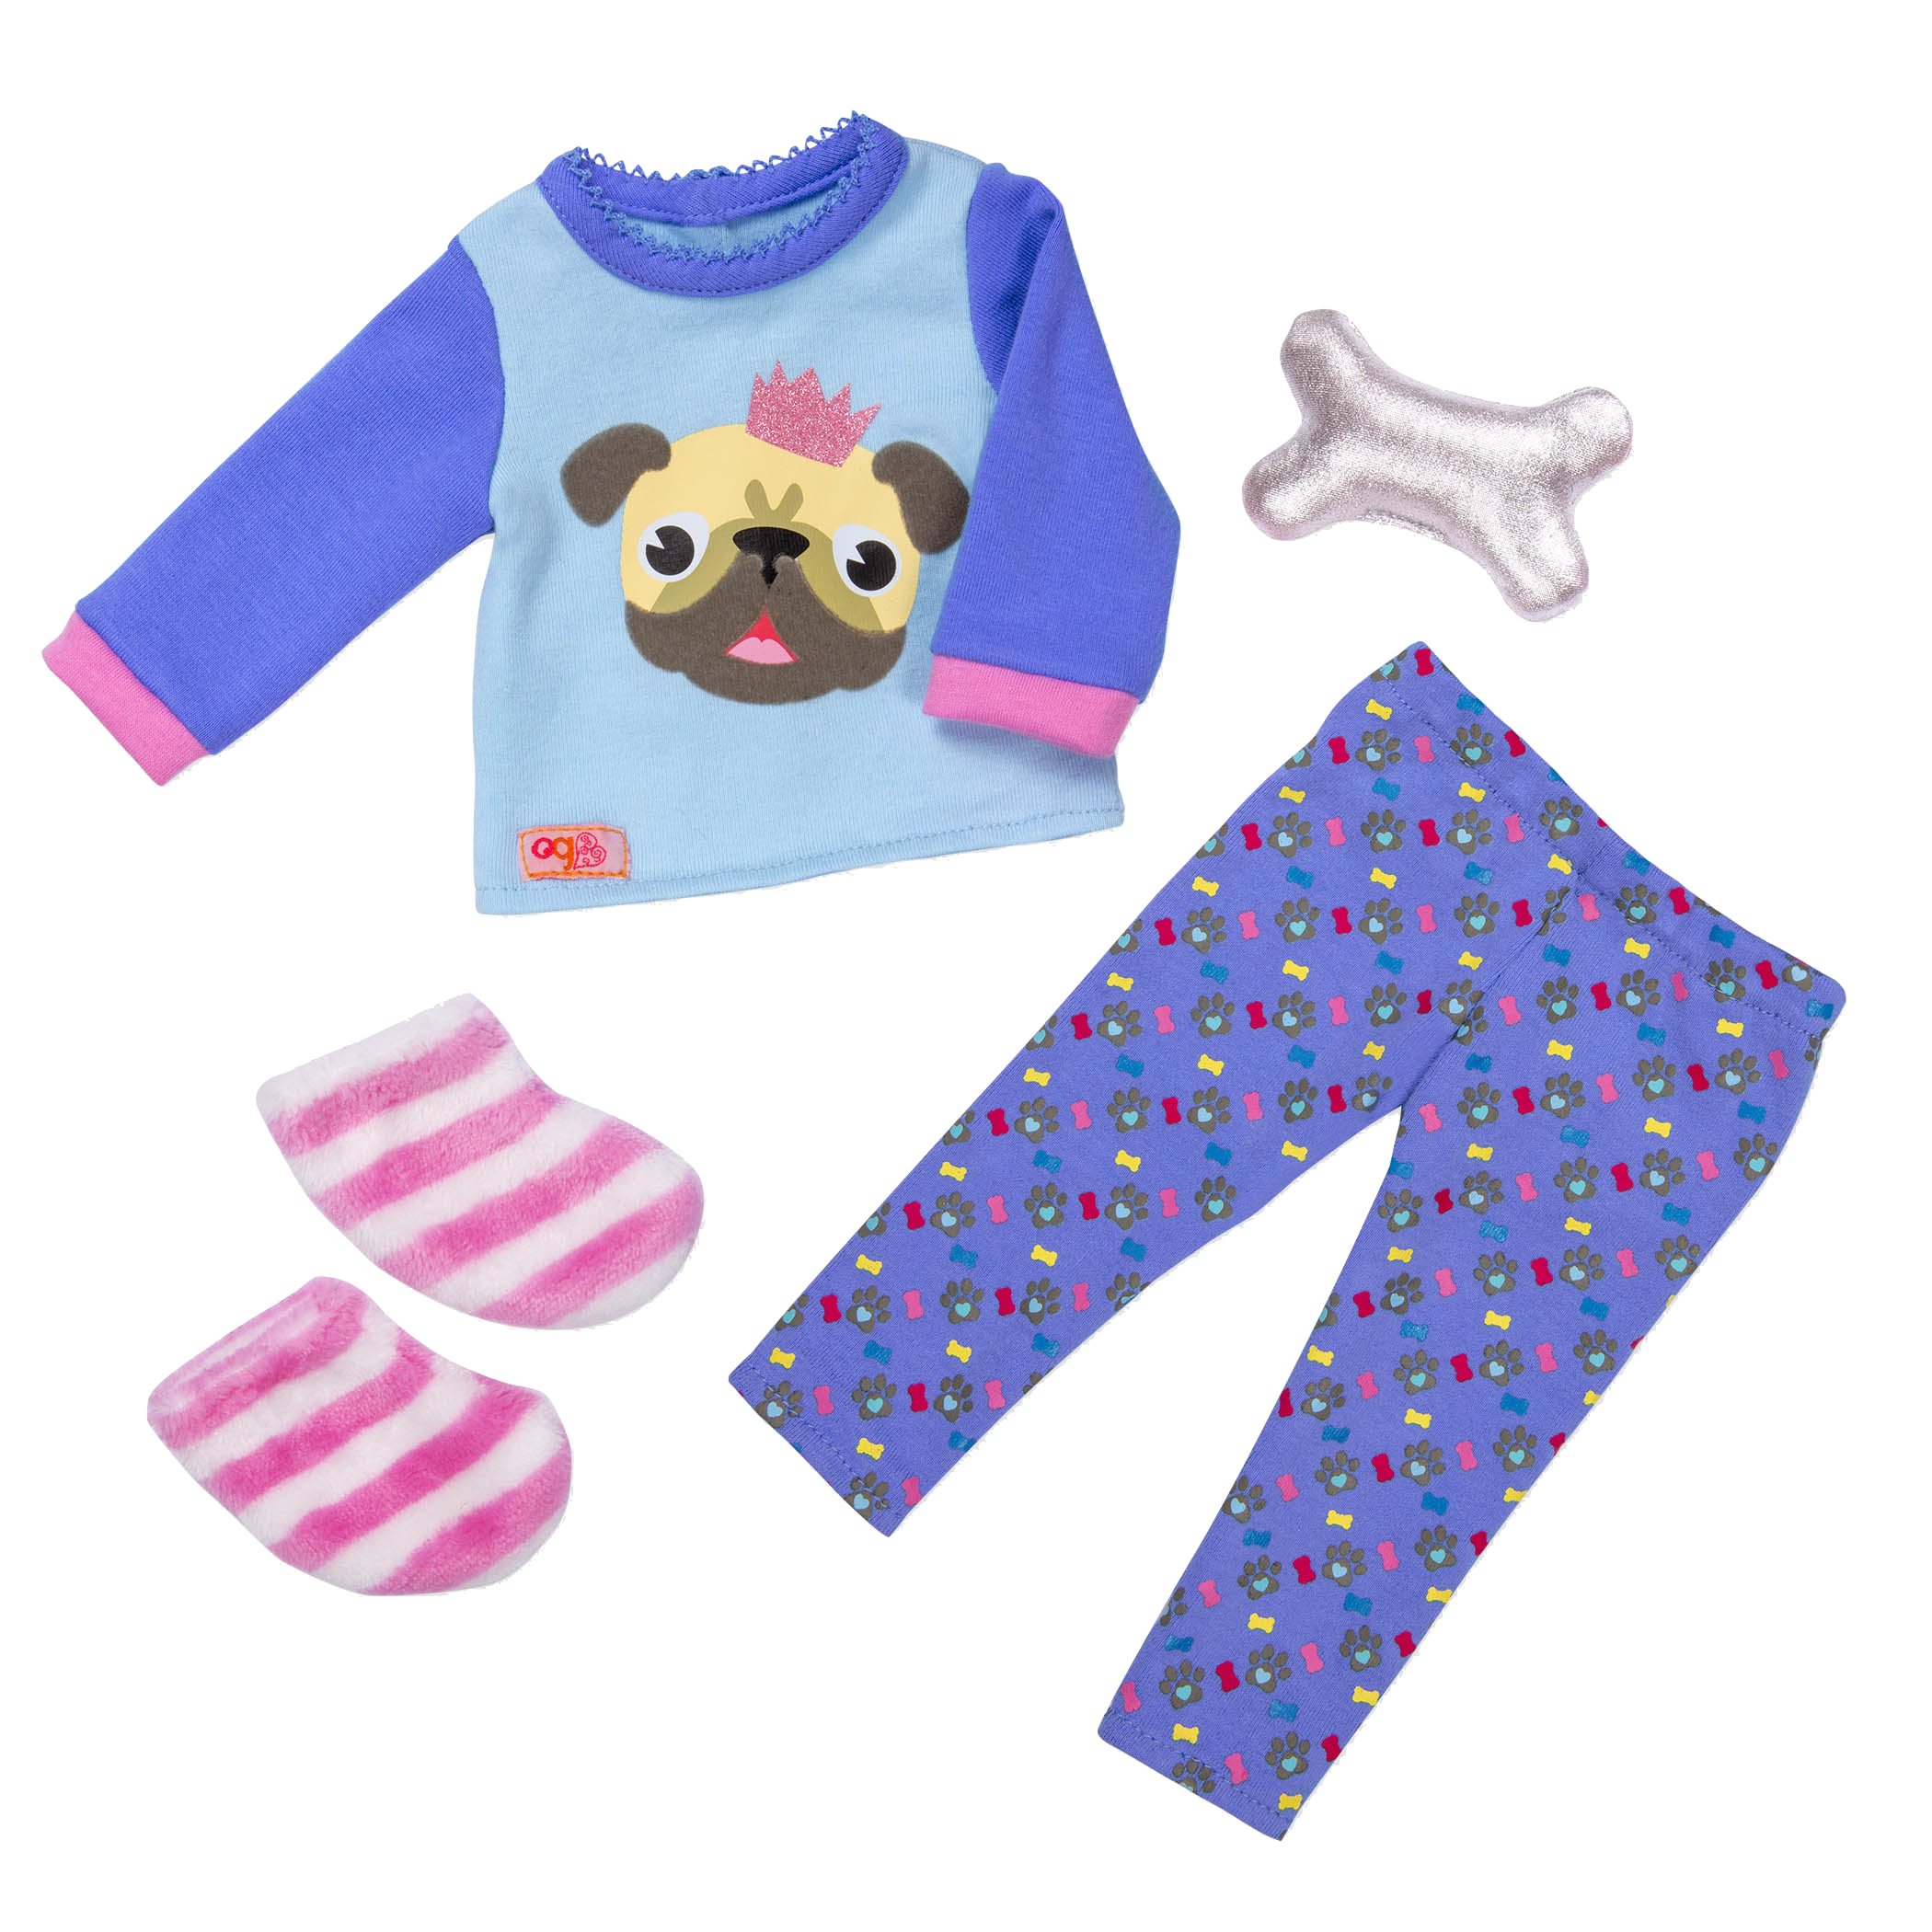 Pug-jama Party Sleepwear Outfit per bambola di 46 cm;Pug-jama Party Sleepwear Outfit per bambola di 46 cm;Pug-jama Party Sleepwear Outfit per bambola di 46 cm